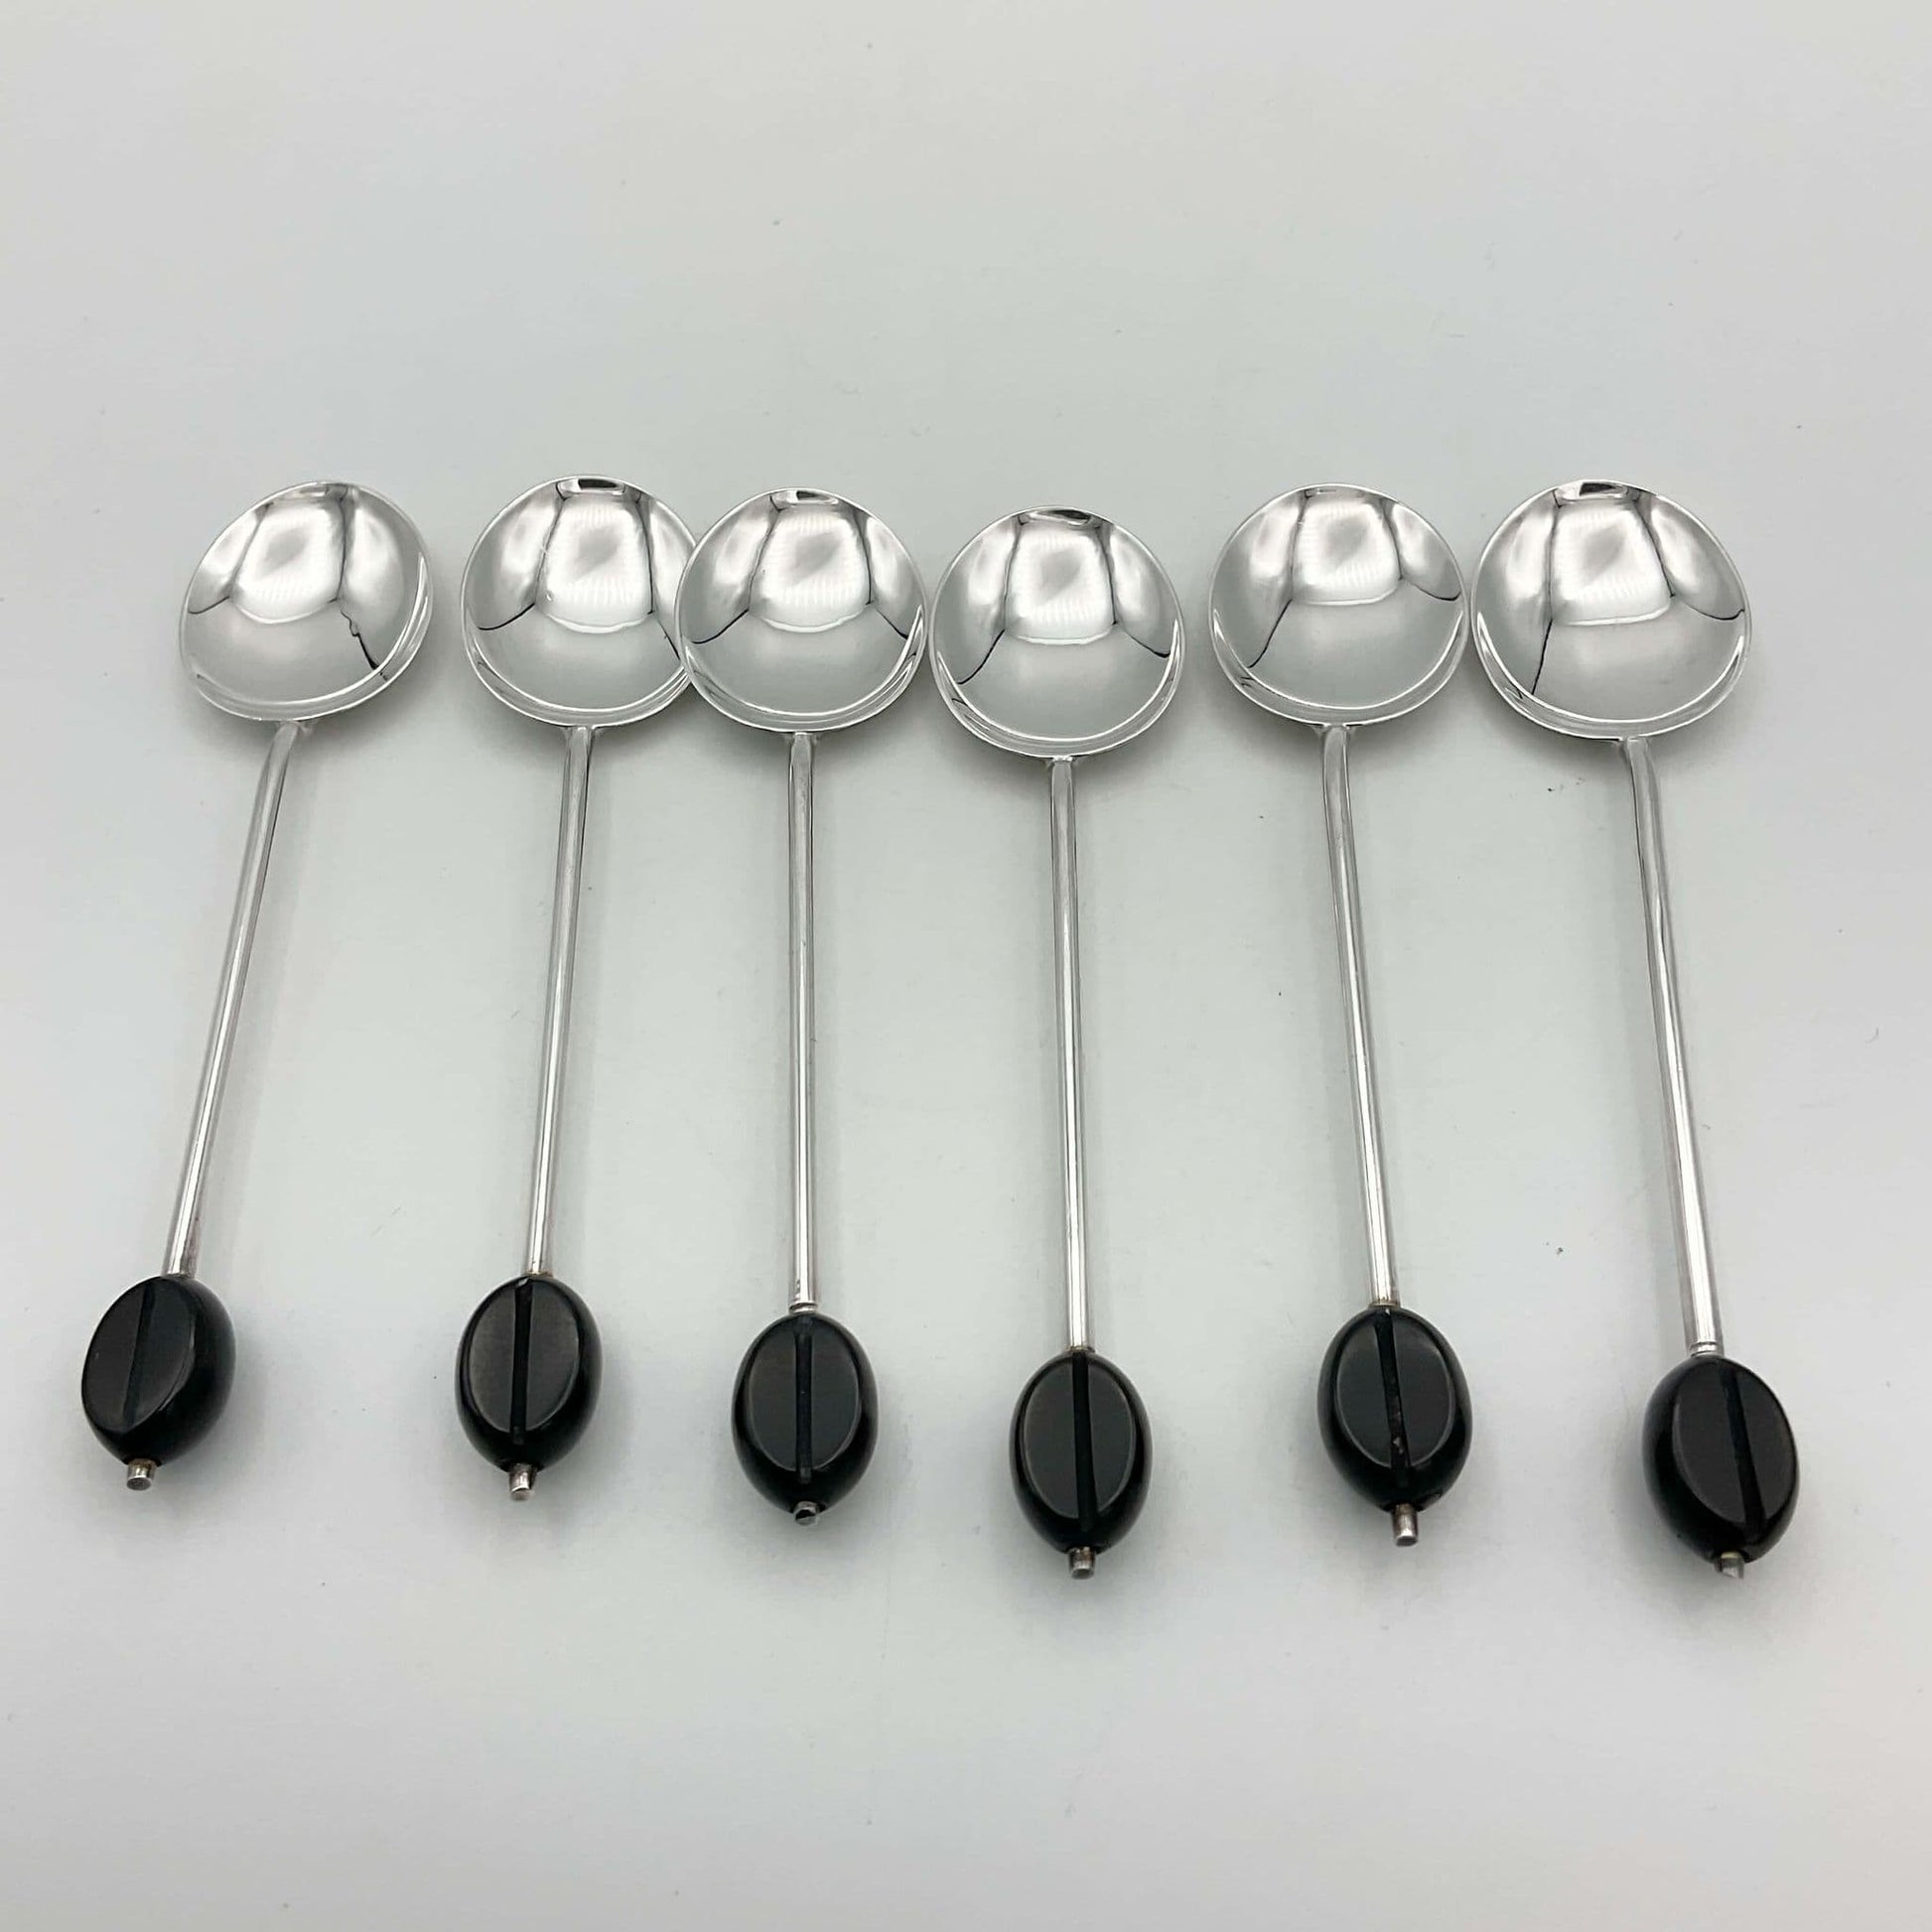 Six elegant silver coffee spoons with black coffee bean finials